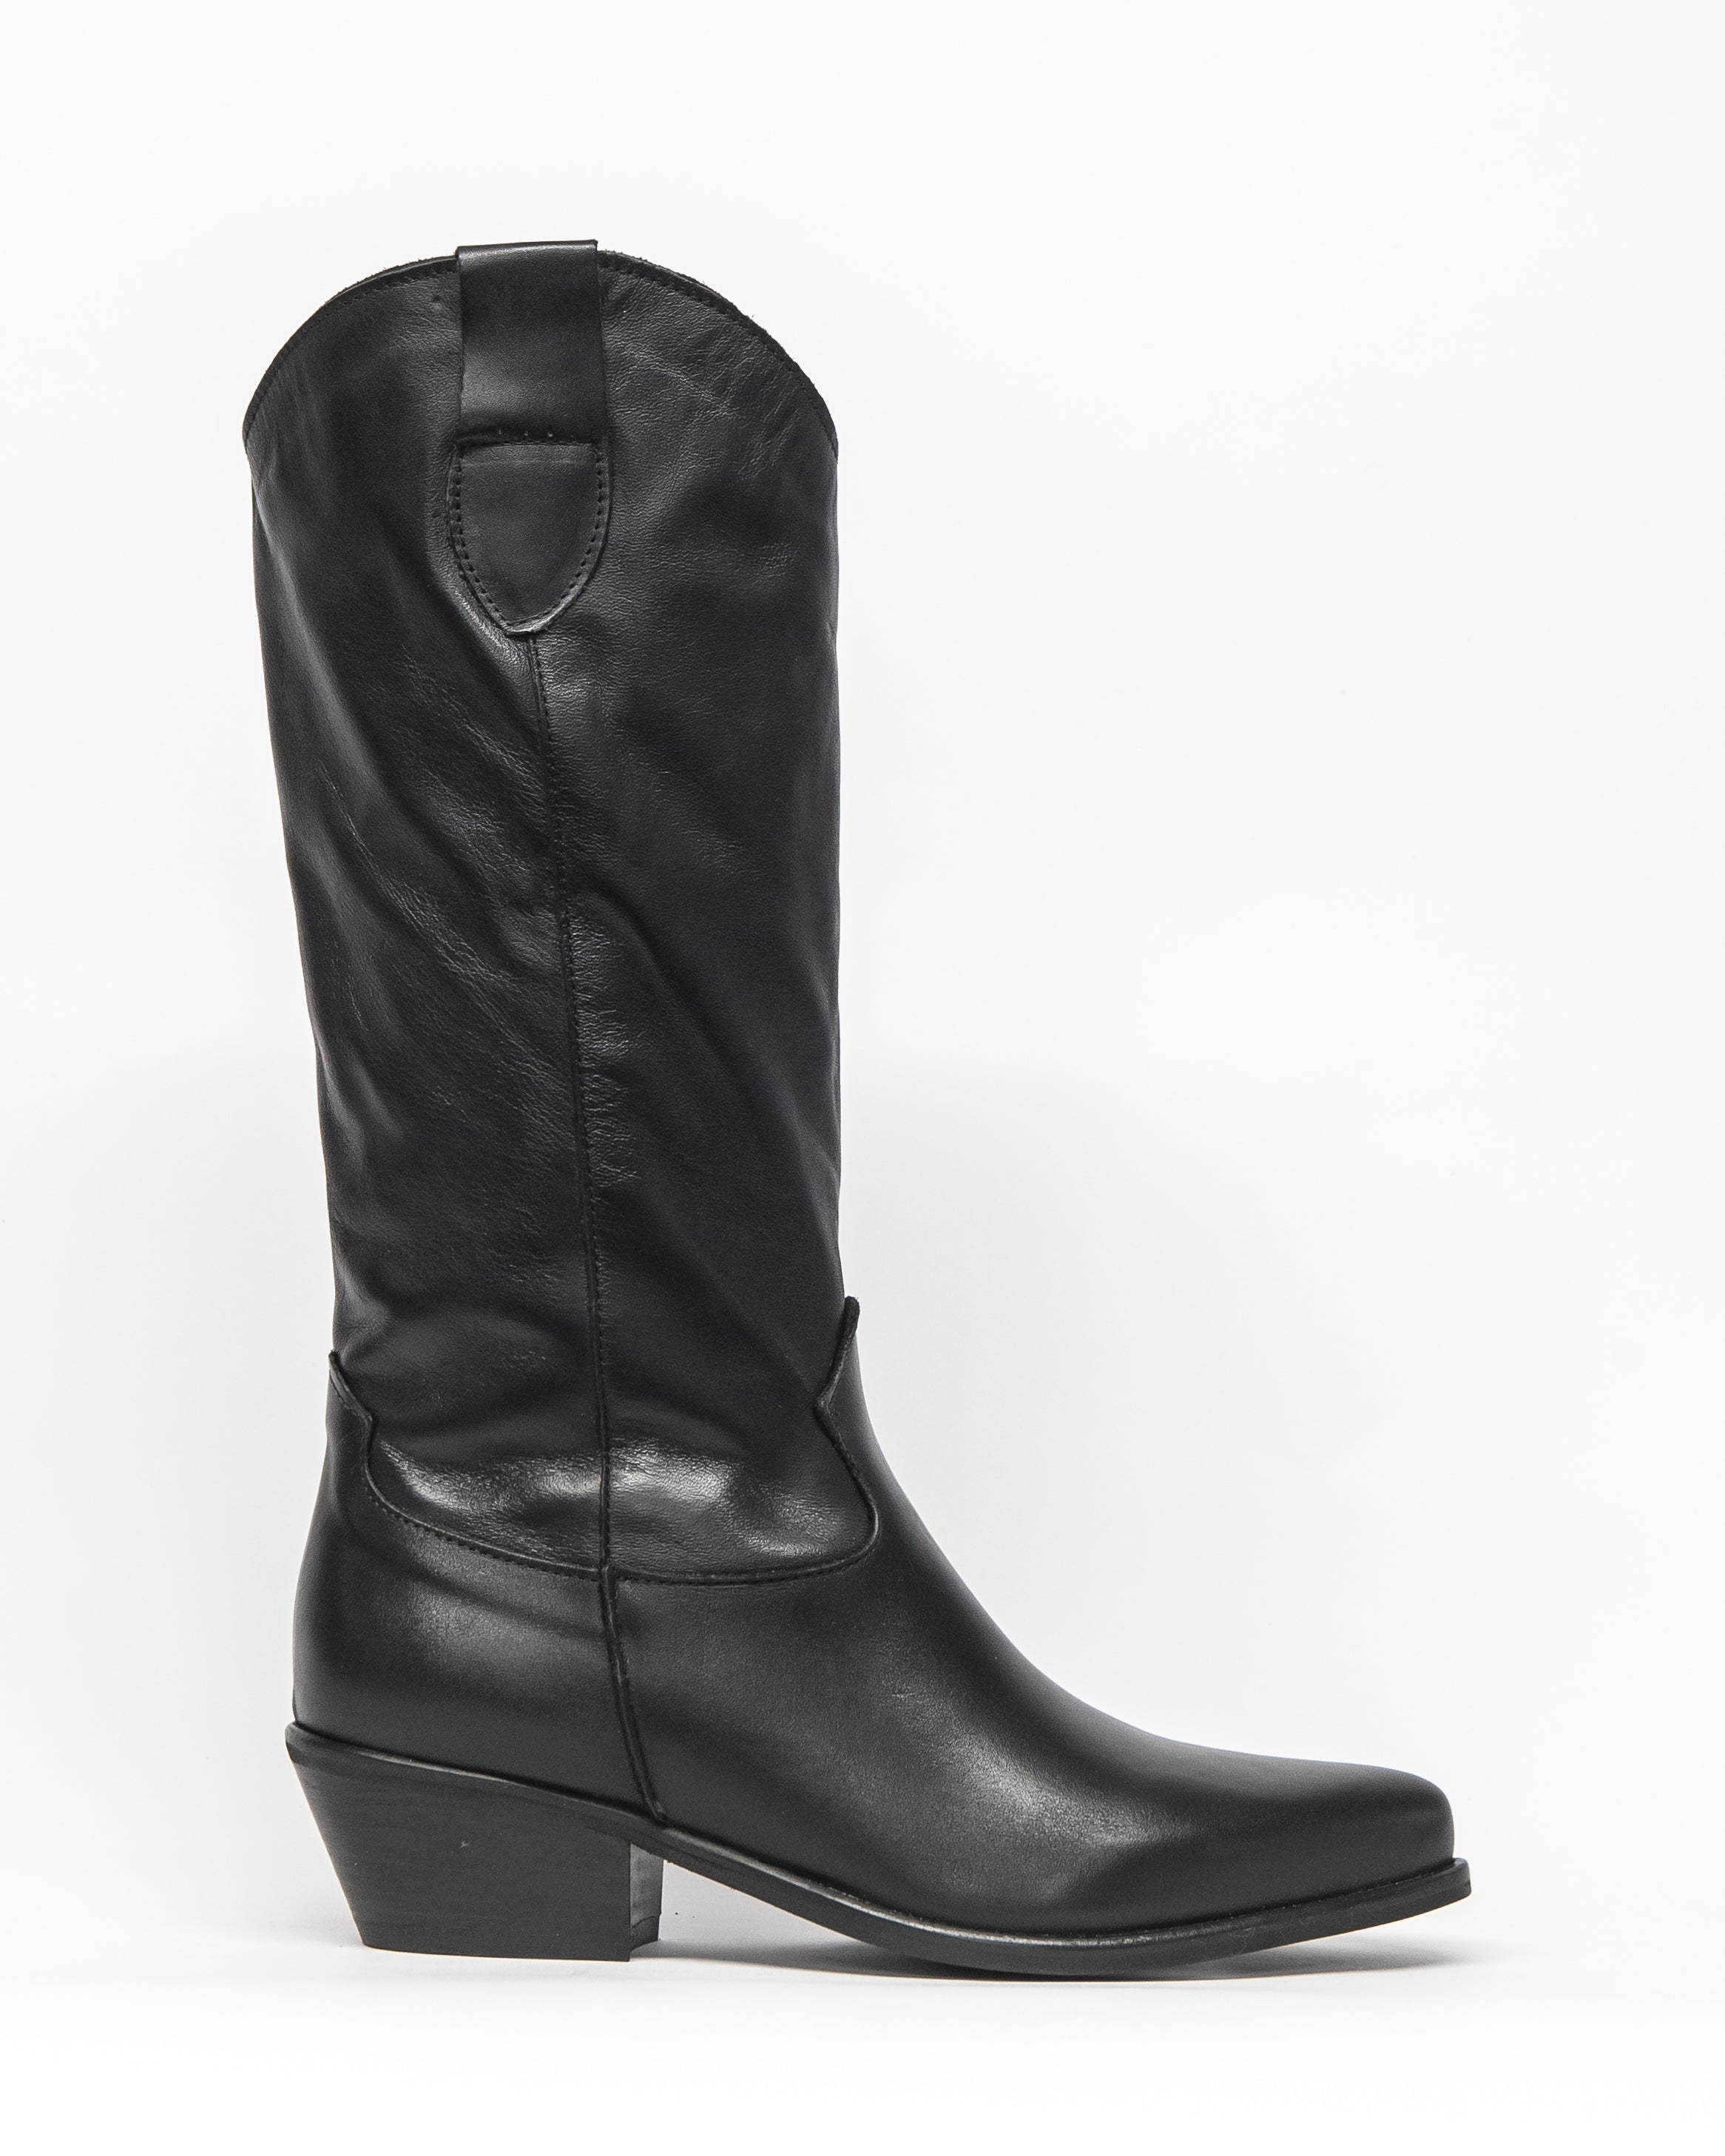 buy sprite boot - black leather | zoe kratzmann